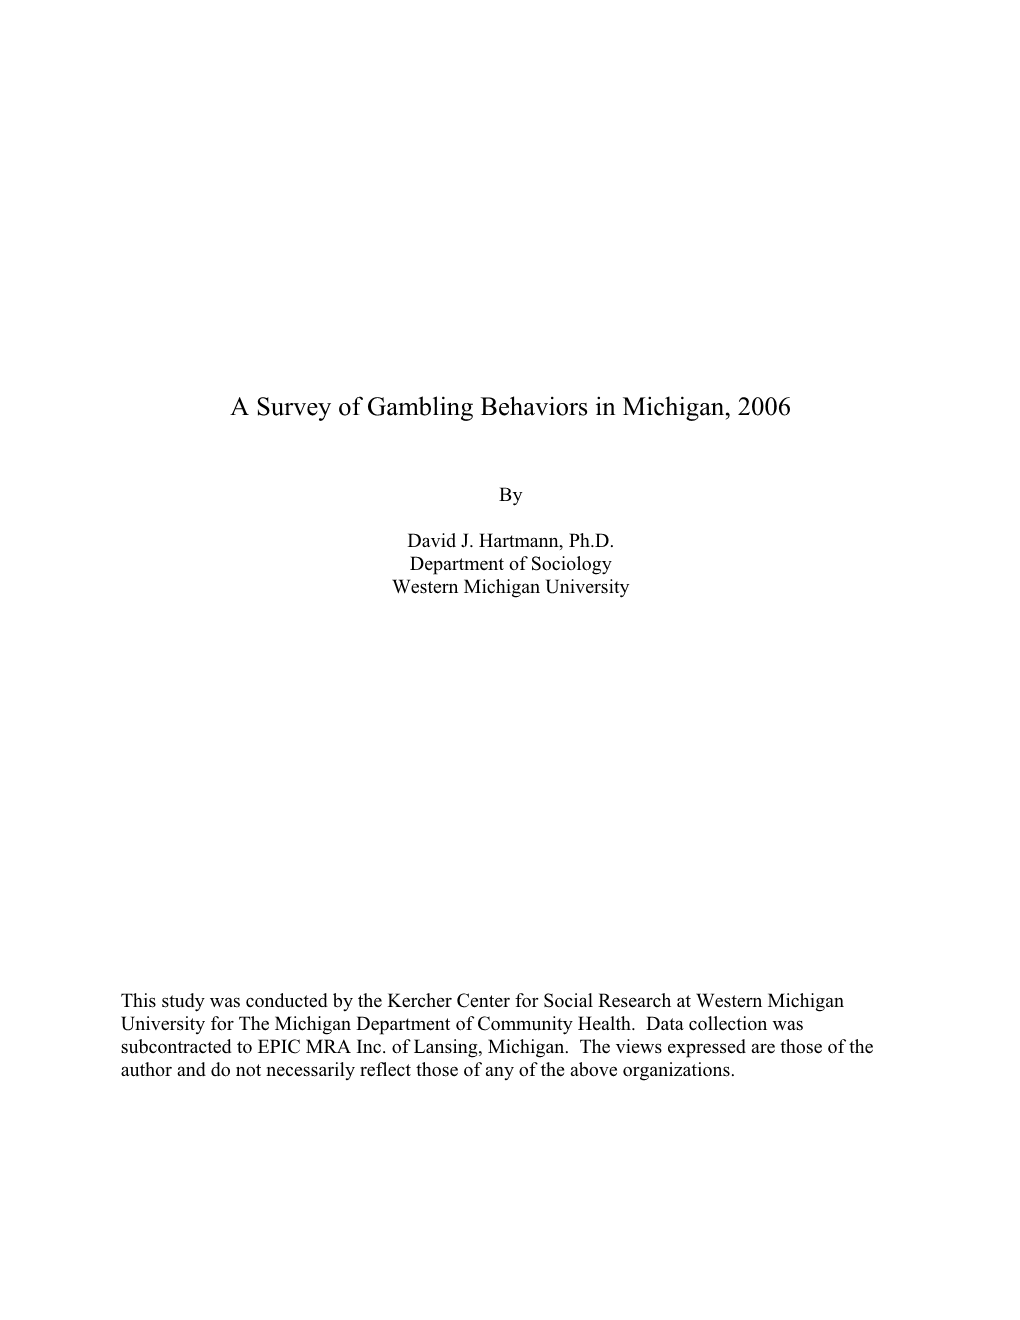 A Survey of Gambling Behaviors in Michigan, 2001